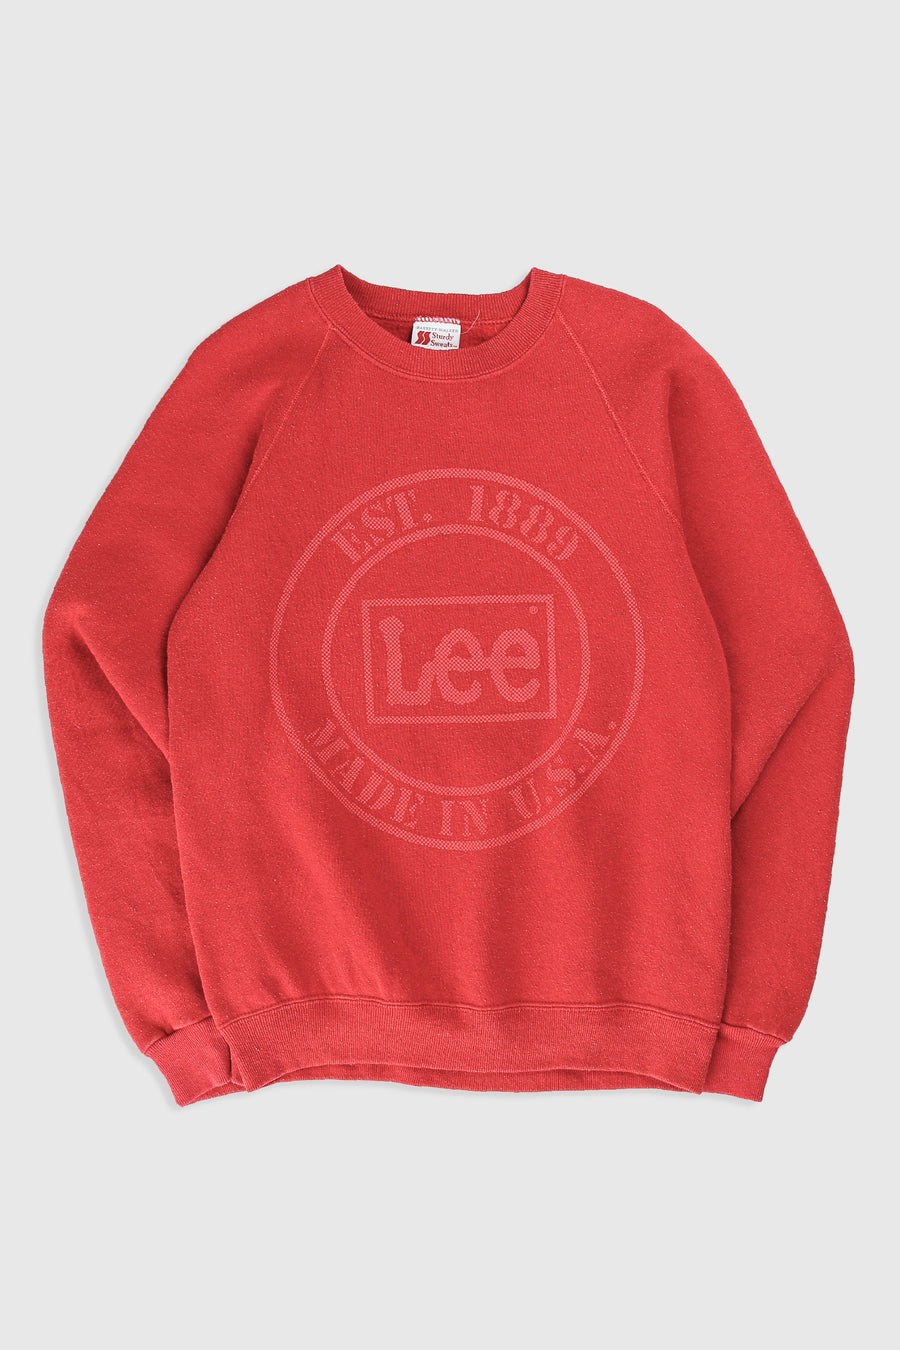 Vintage Lee Sweatshirt